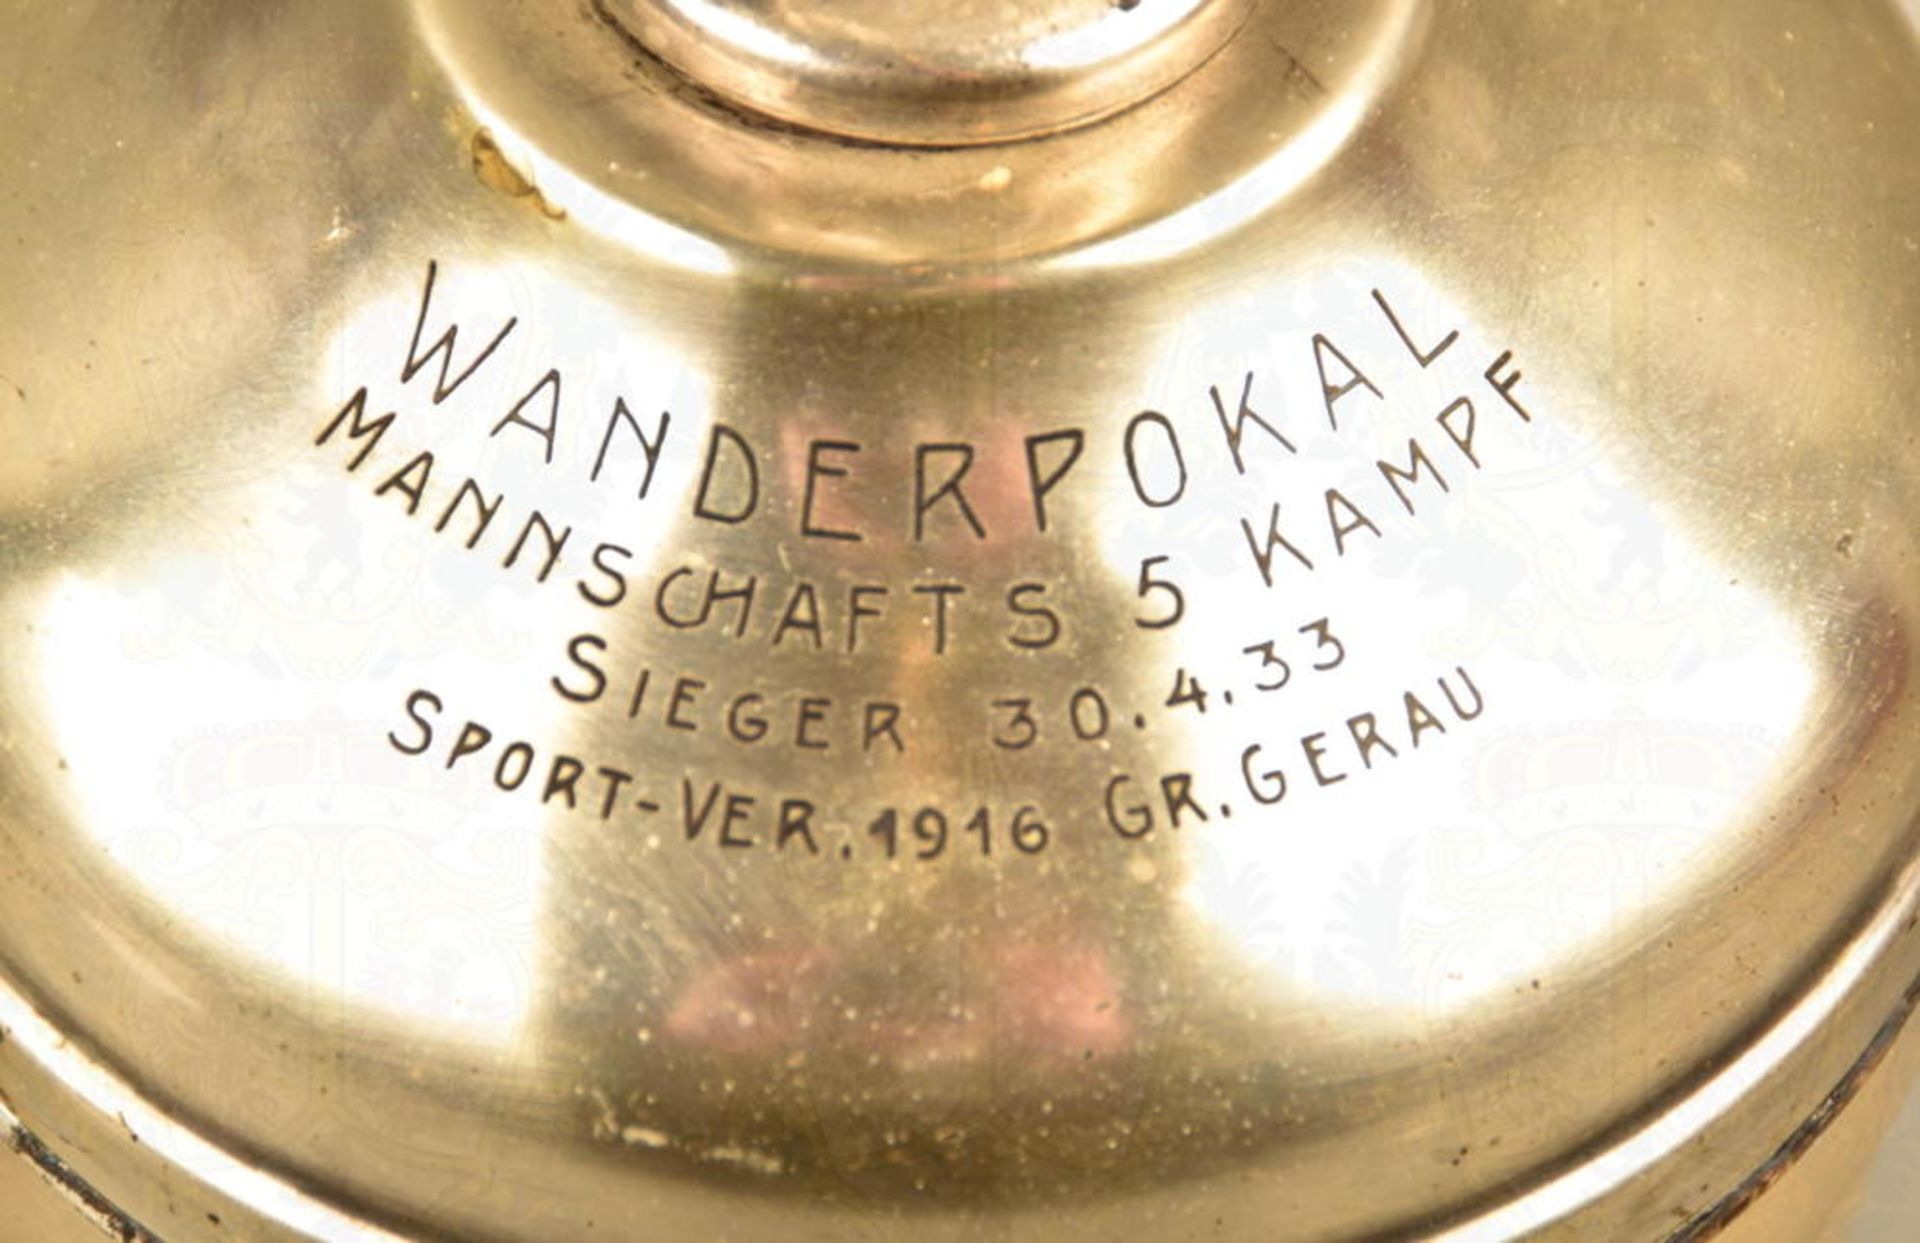 Wanderpokal Sieger im Mannschafts-Fünfkampf 30.4.1933 - Image 2 of 4